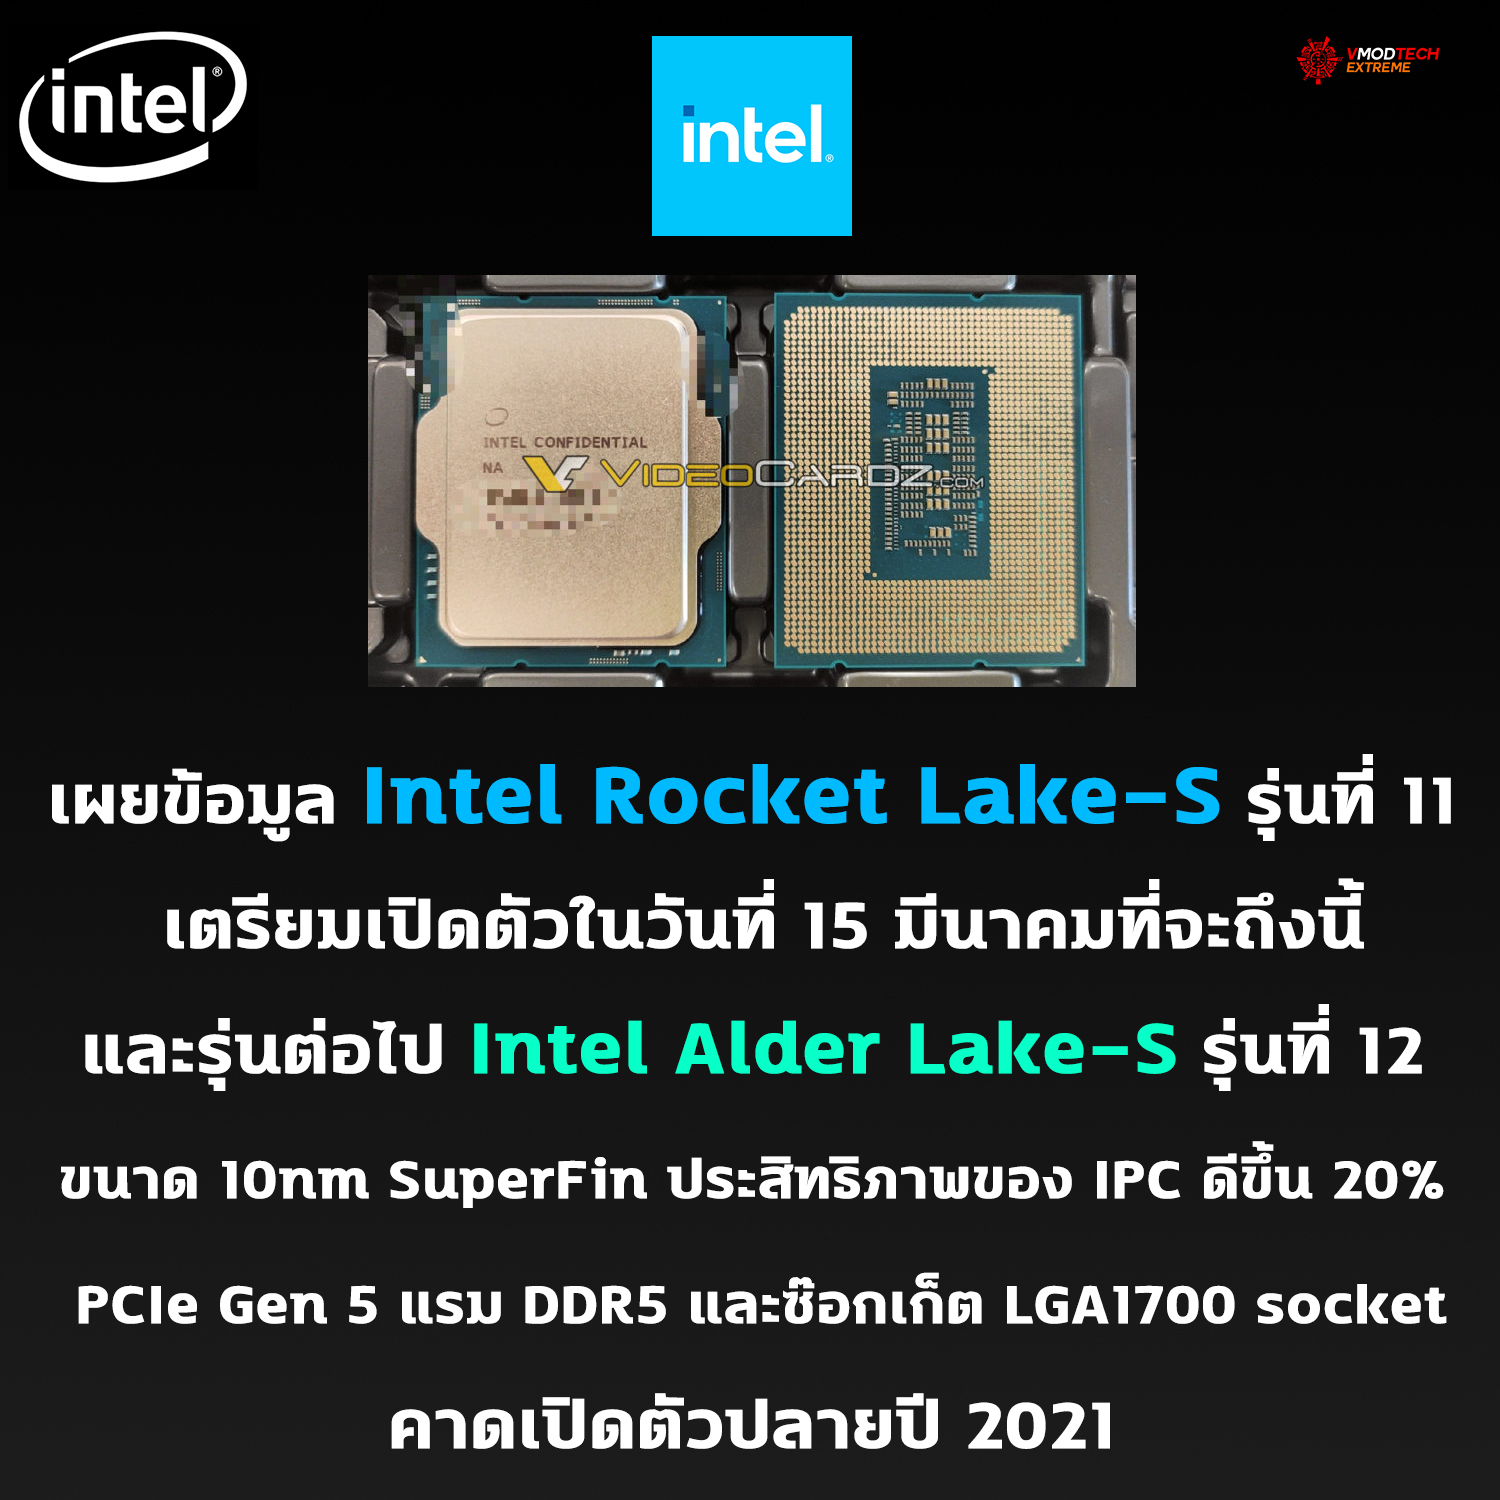 intel rocket lake s to be available on march 15th เผยข้อมูล Intel Rocket Lake S รุ่นที่ 11 เตรียมเปิดตัวในวันที่ 15 มีนาคมที่จะถึงนี้และรุ่นต่อไป Alder Lake S จะใช้สถาปัตย์ขนาด 10nm SuperFin คาดเปิดตัวปลายปี 2021